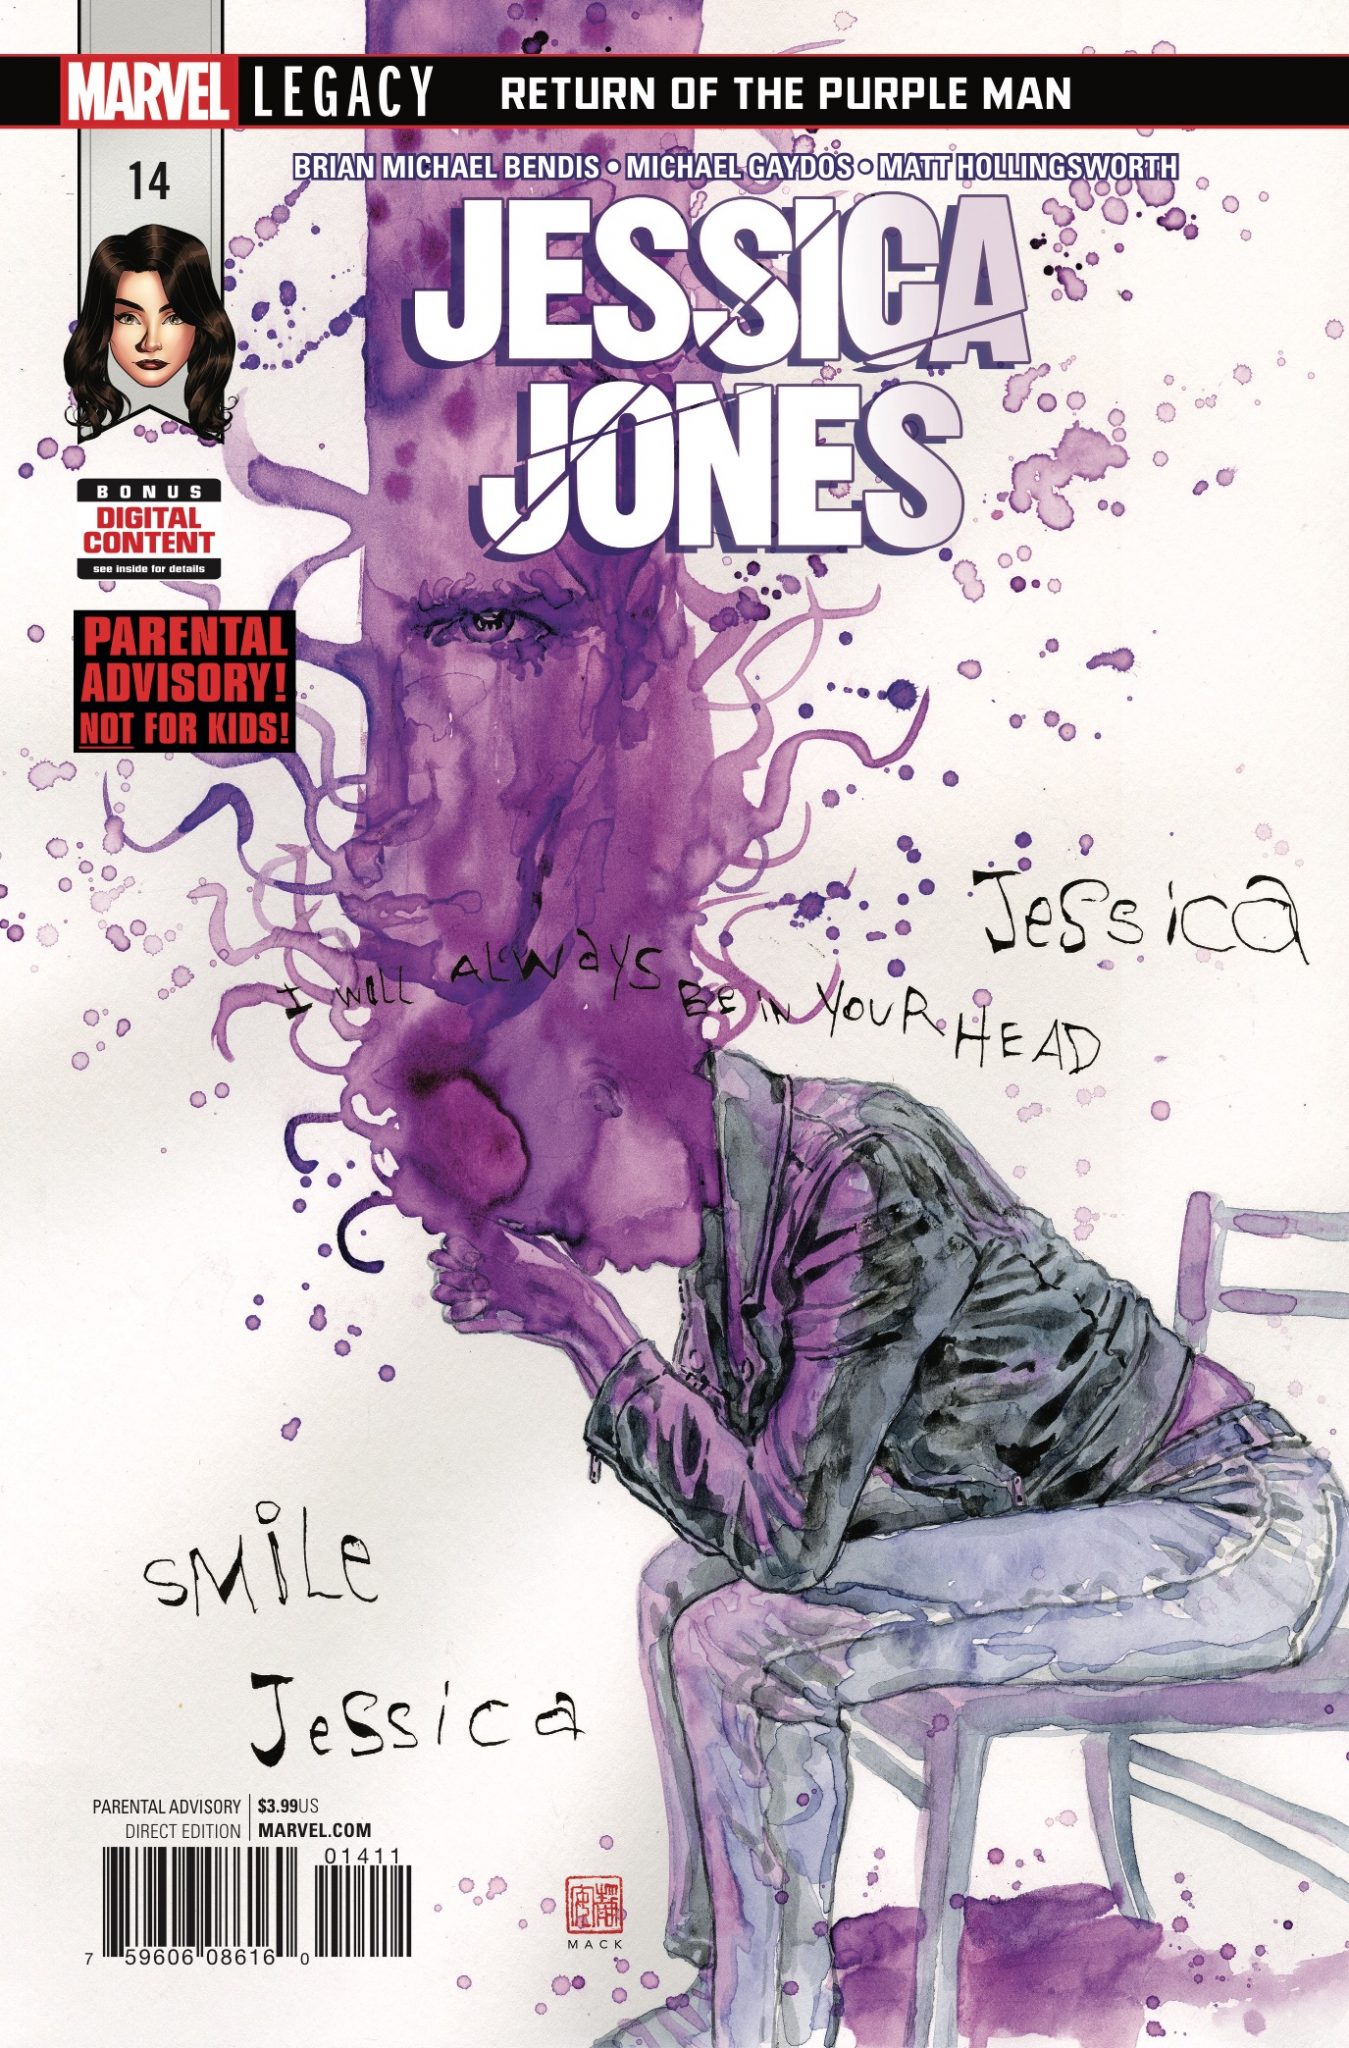 Marvel Preview: Jessica Jones #14